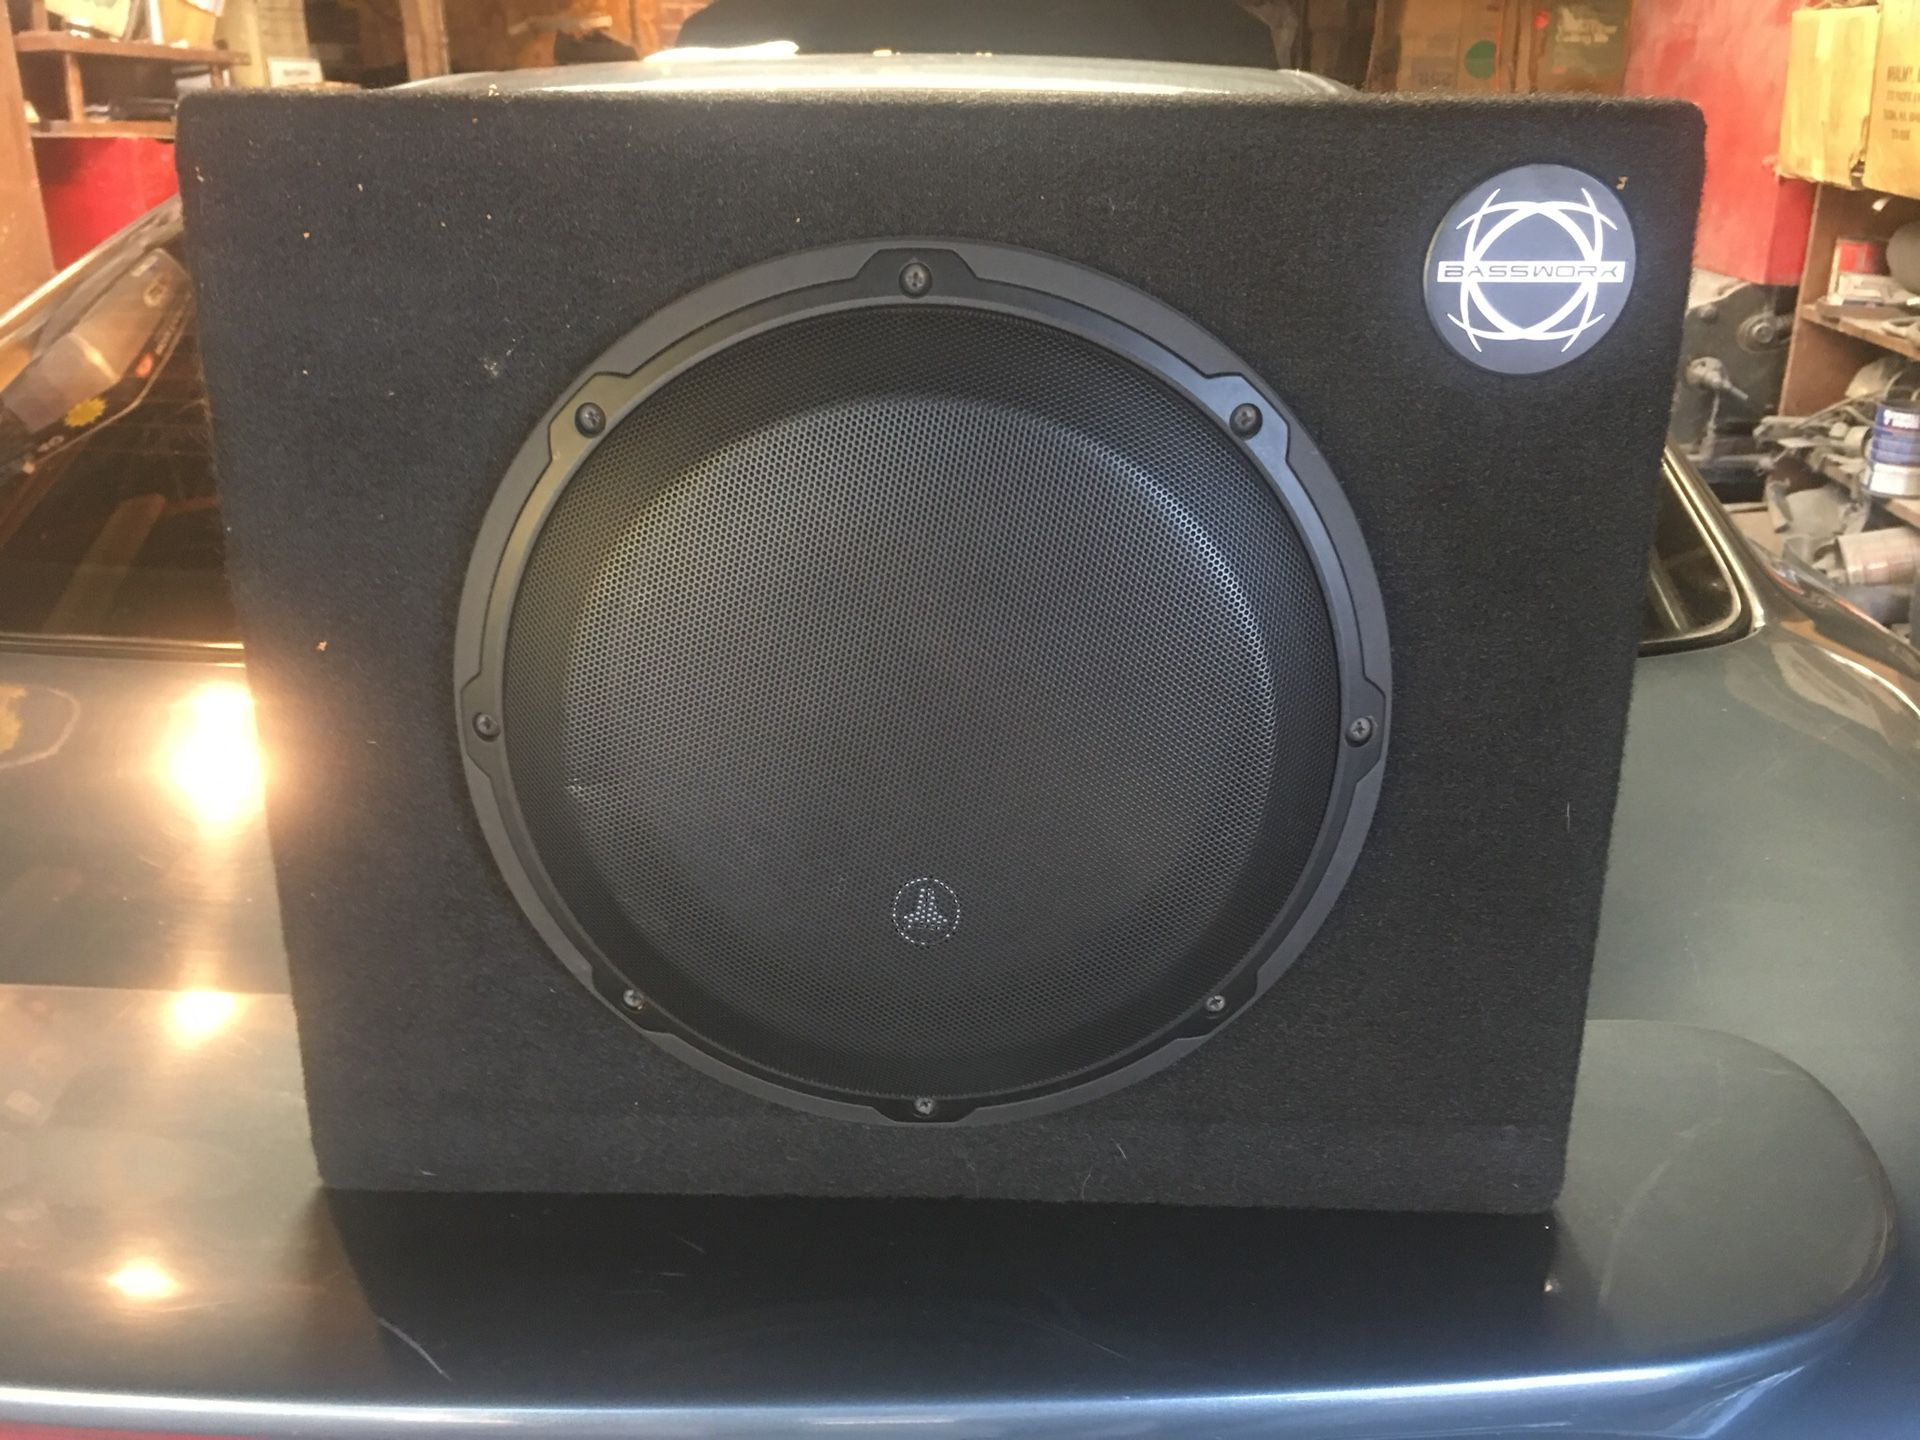 Jl audio speaker in a bassworks box